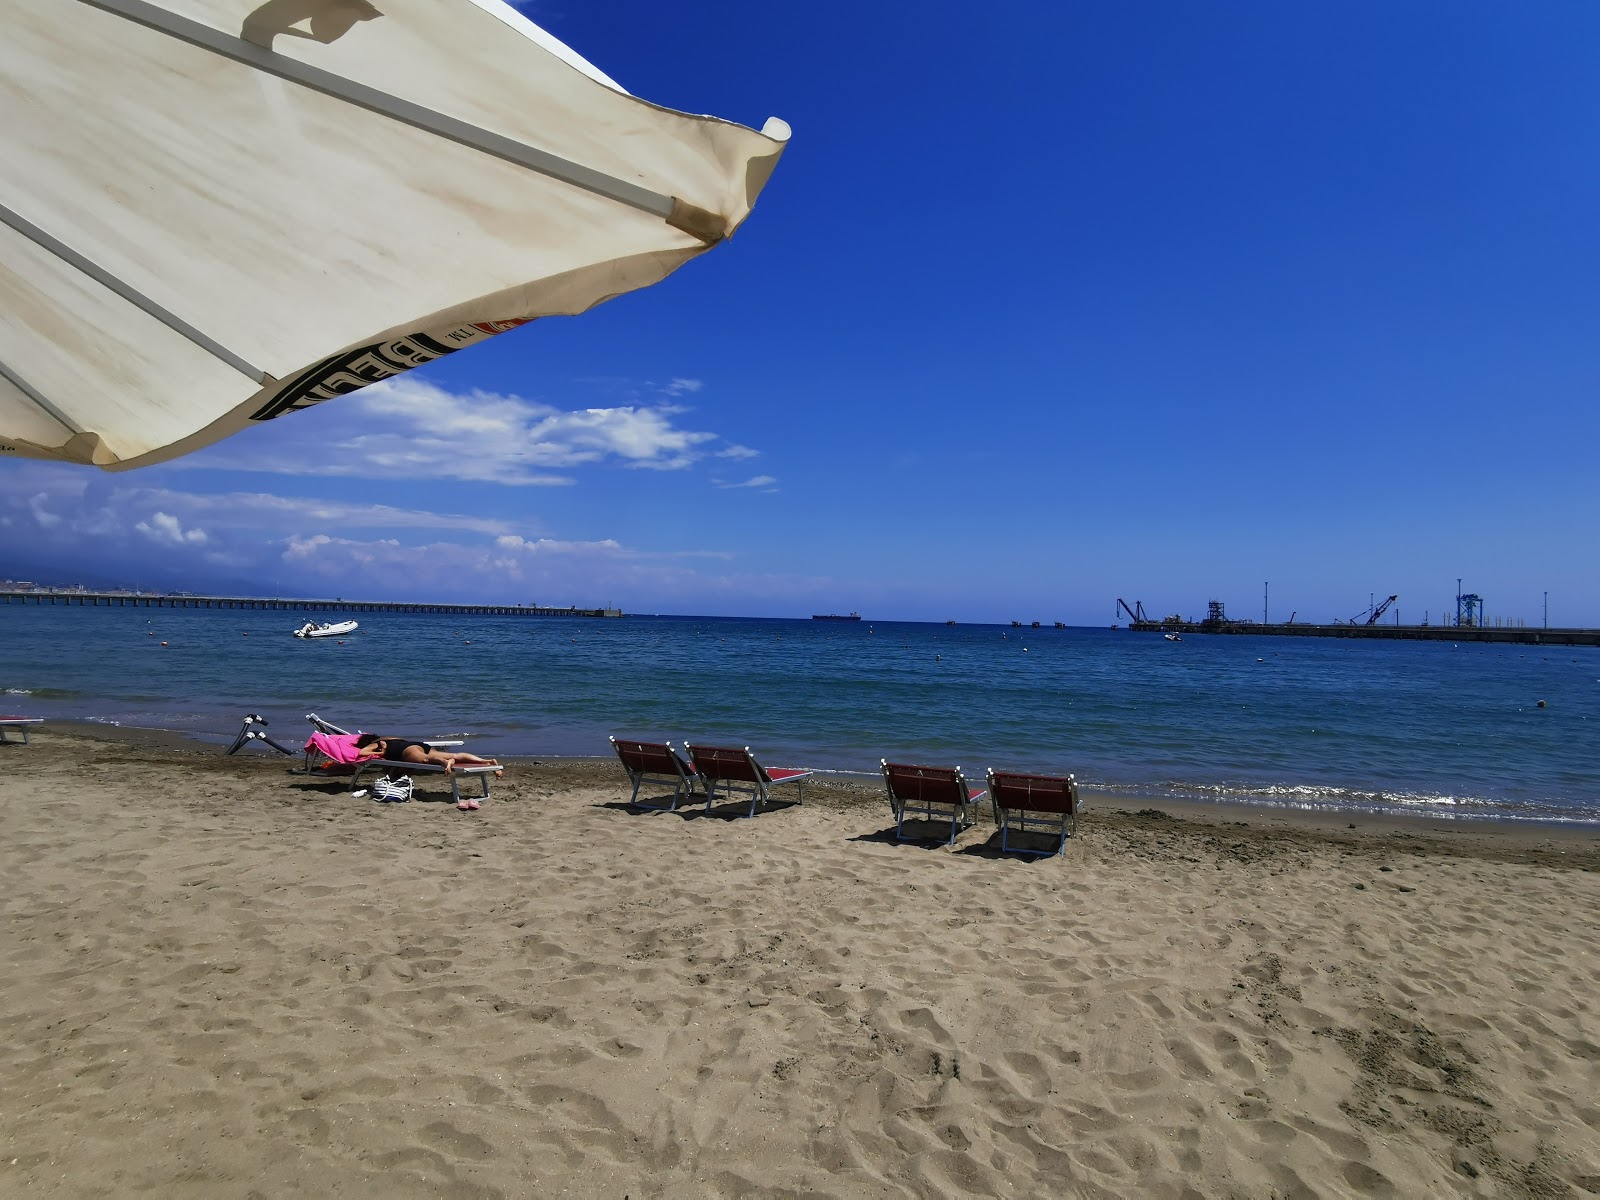 Foto von Spiaggia di Vado Ligure mit geräumige bucht